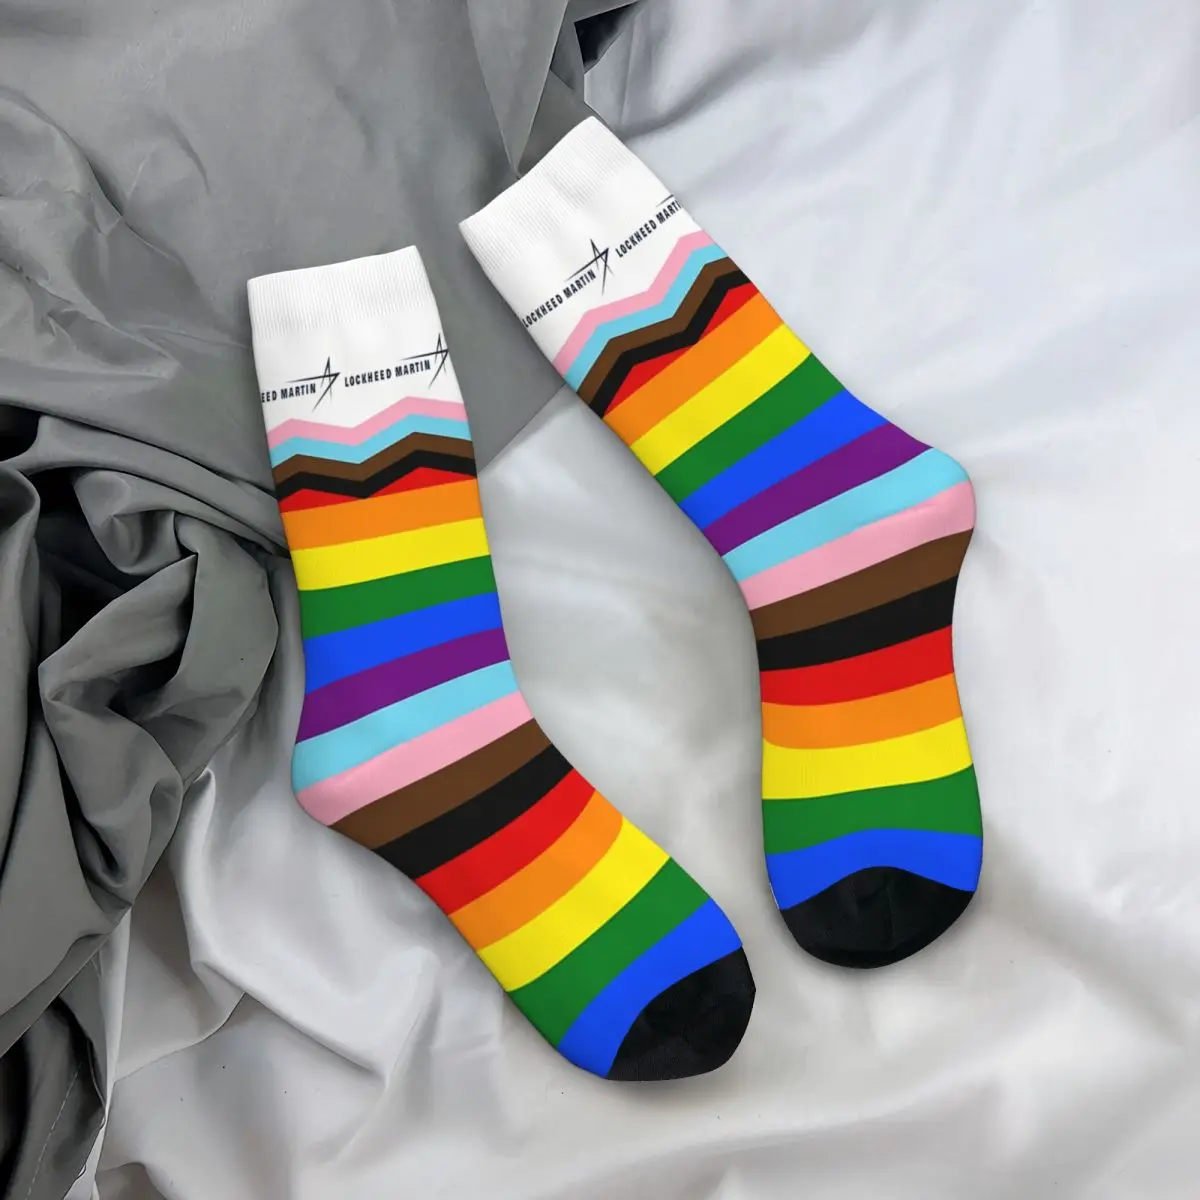 Lockheed Martin Gay Rride Socks Male Mens Women Autumn Stockings Printed